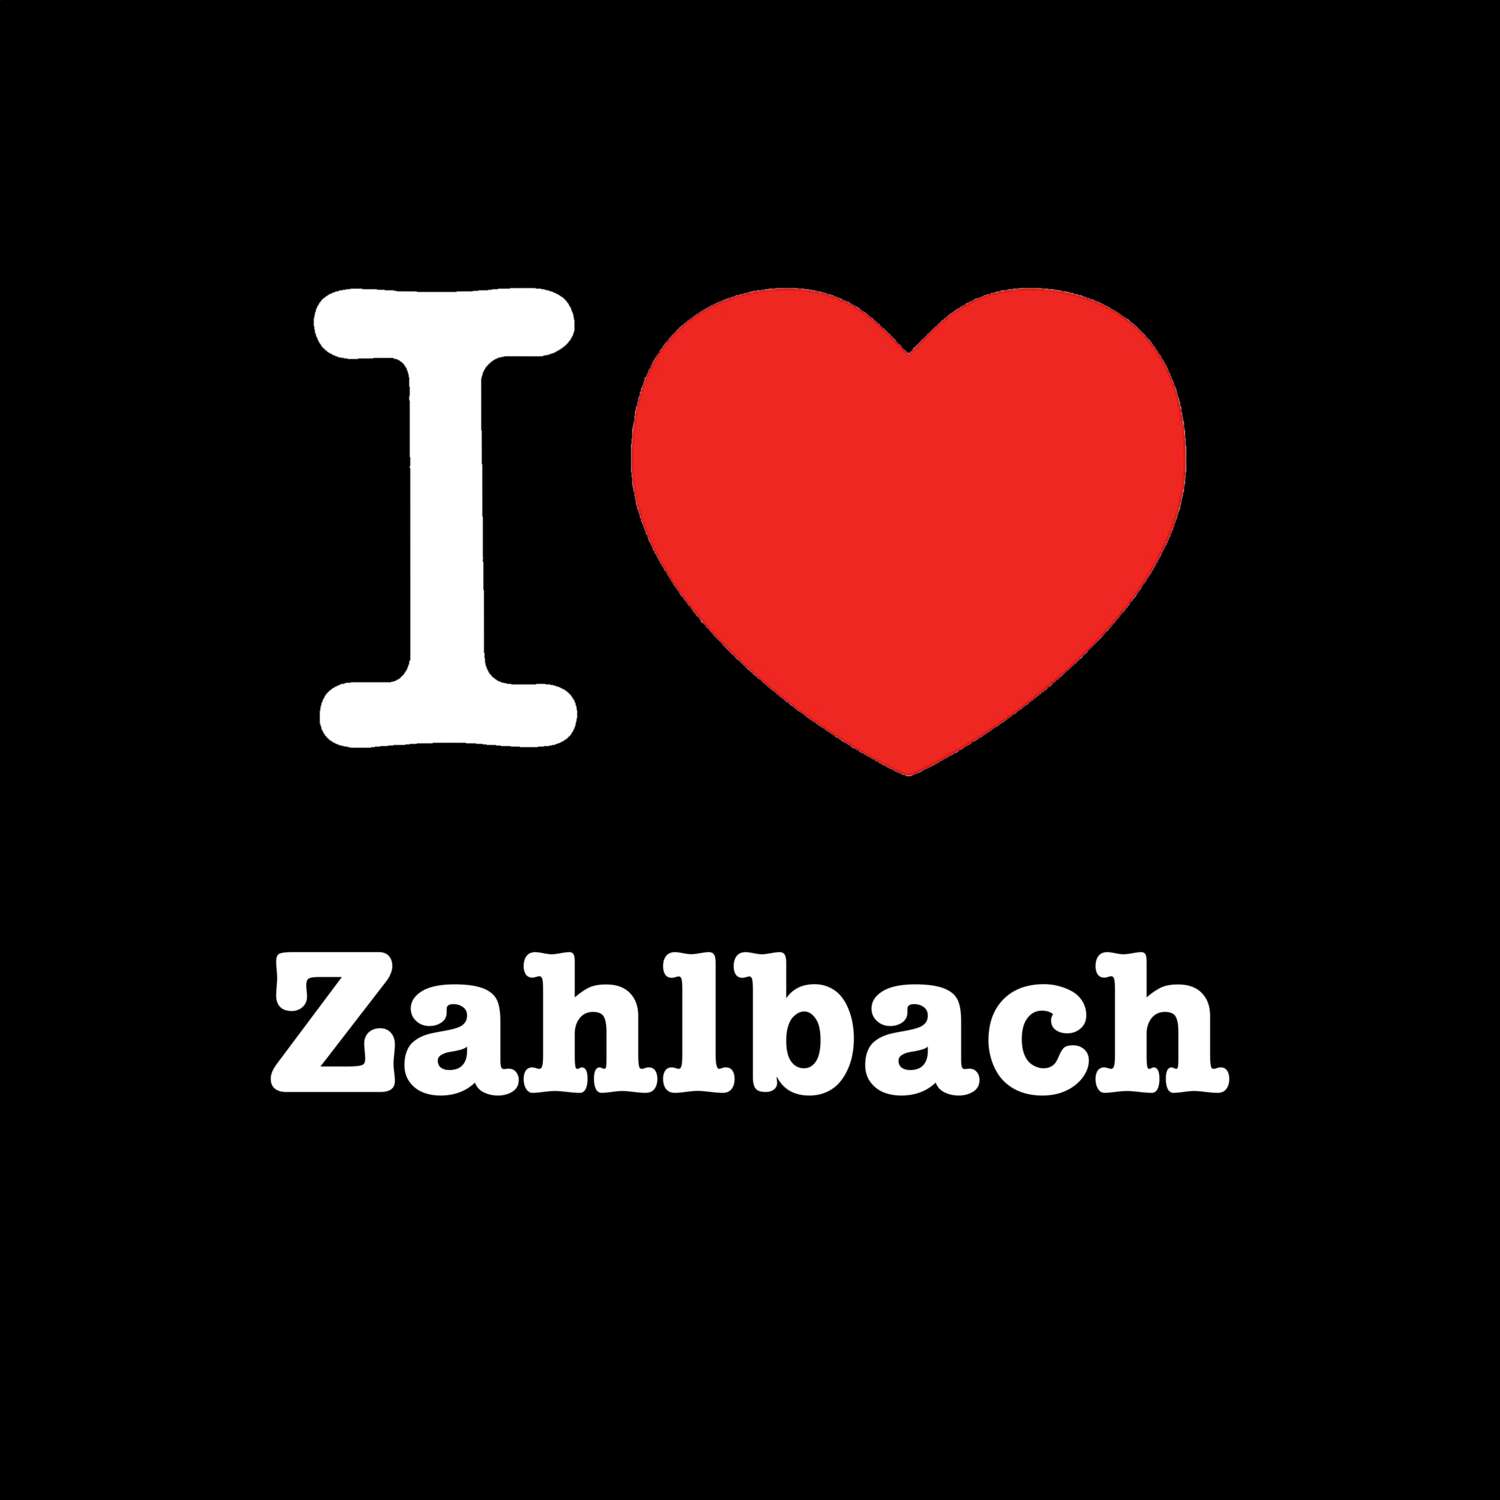 Zahlbach T-Shirt »I love«